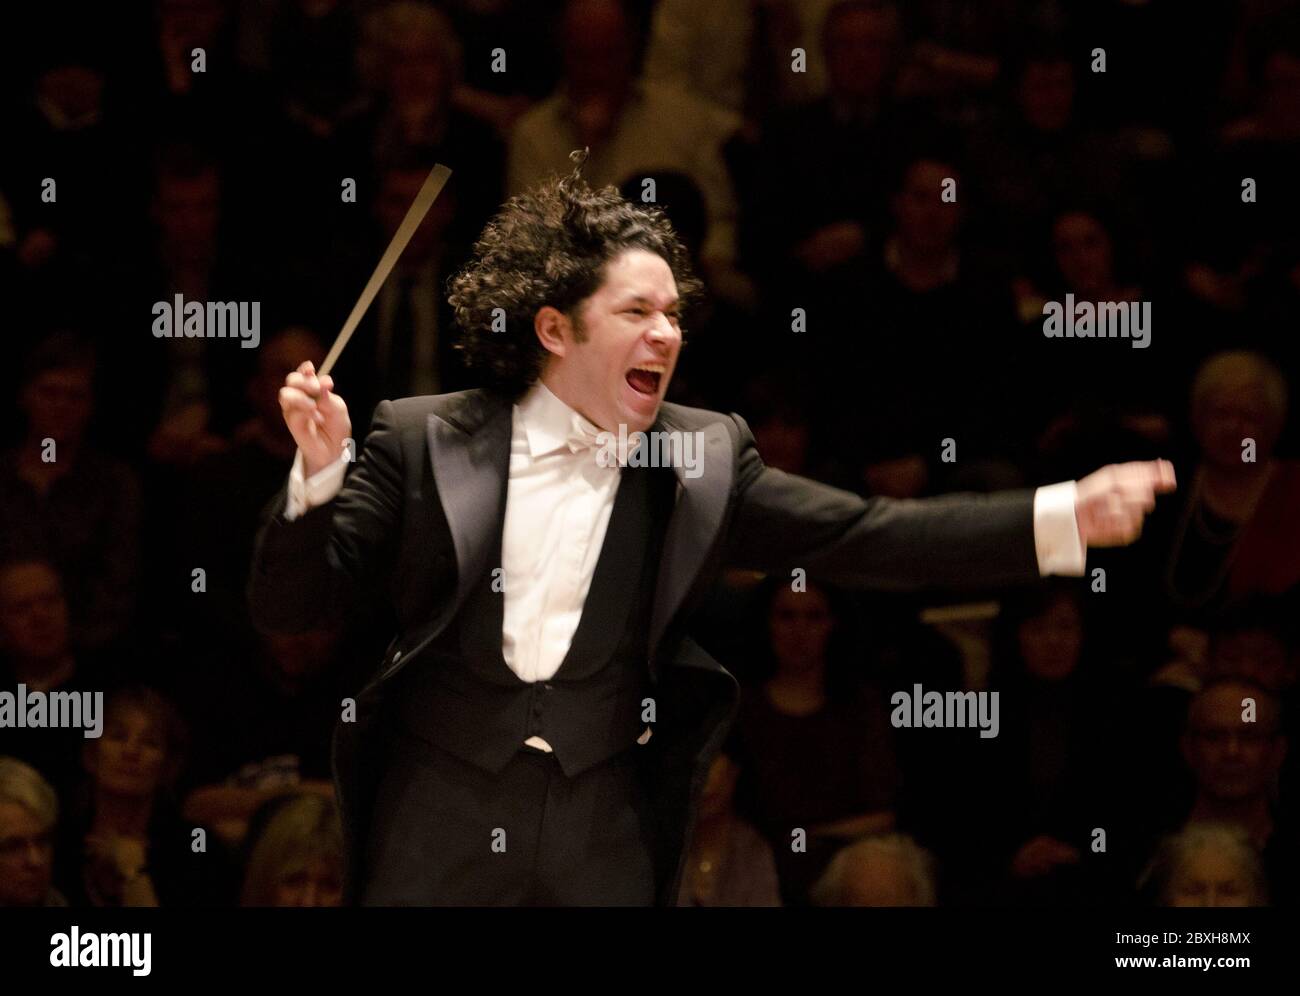 Gustavo Dudamel's Upcoming Events